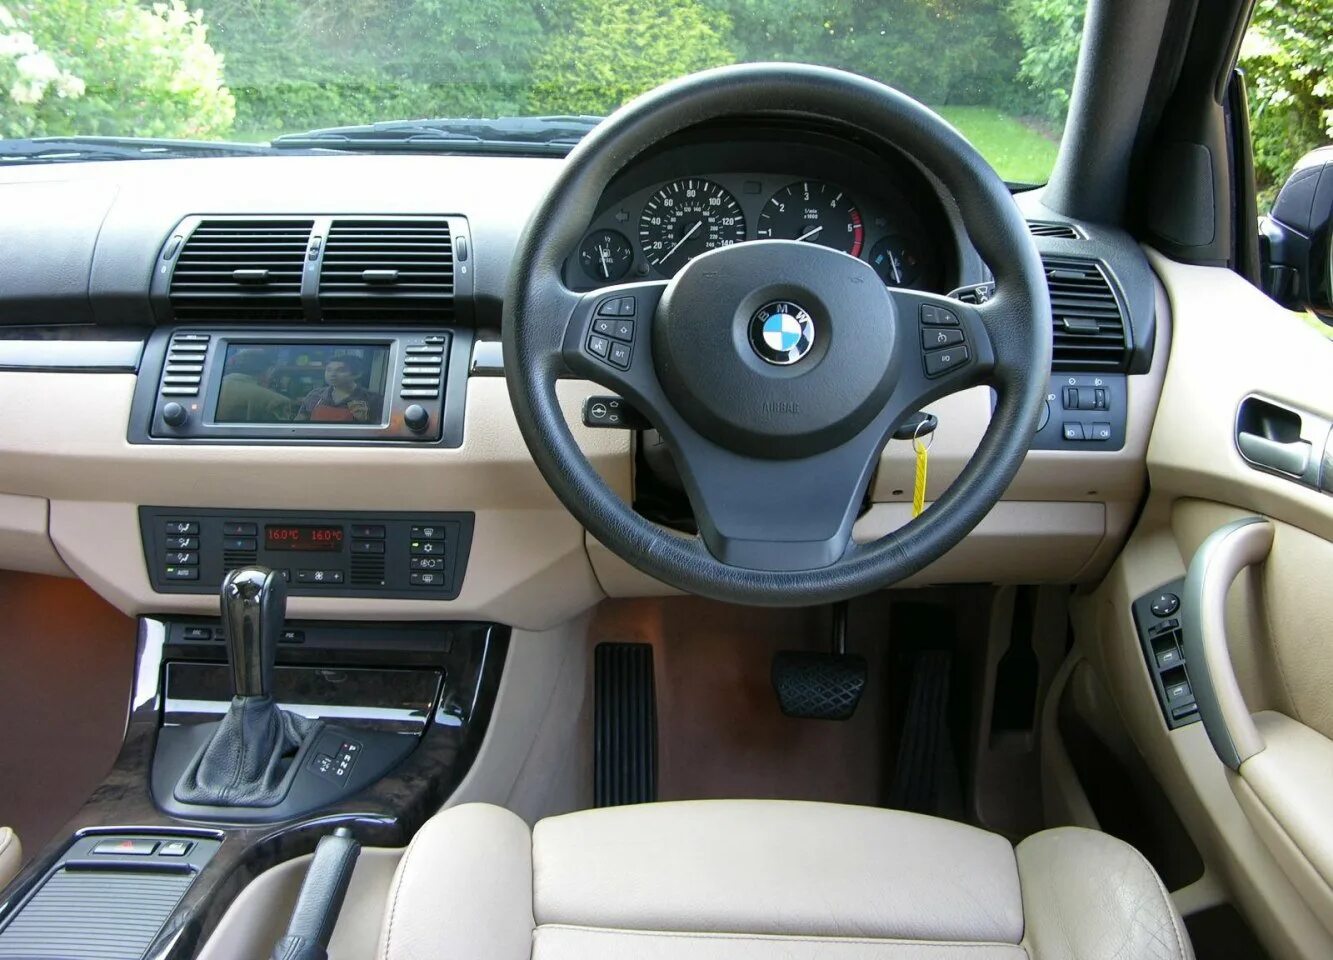 Bmw x5 3.0 дизель. BMW x5 e53 салон. BMW x5 2000 Interior. BMW x5 2005. BMW x5 e53 3.0i салон.